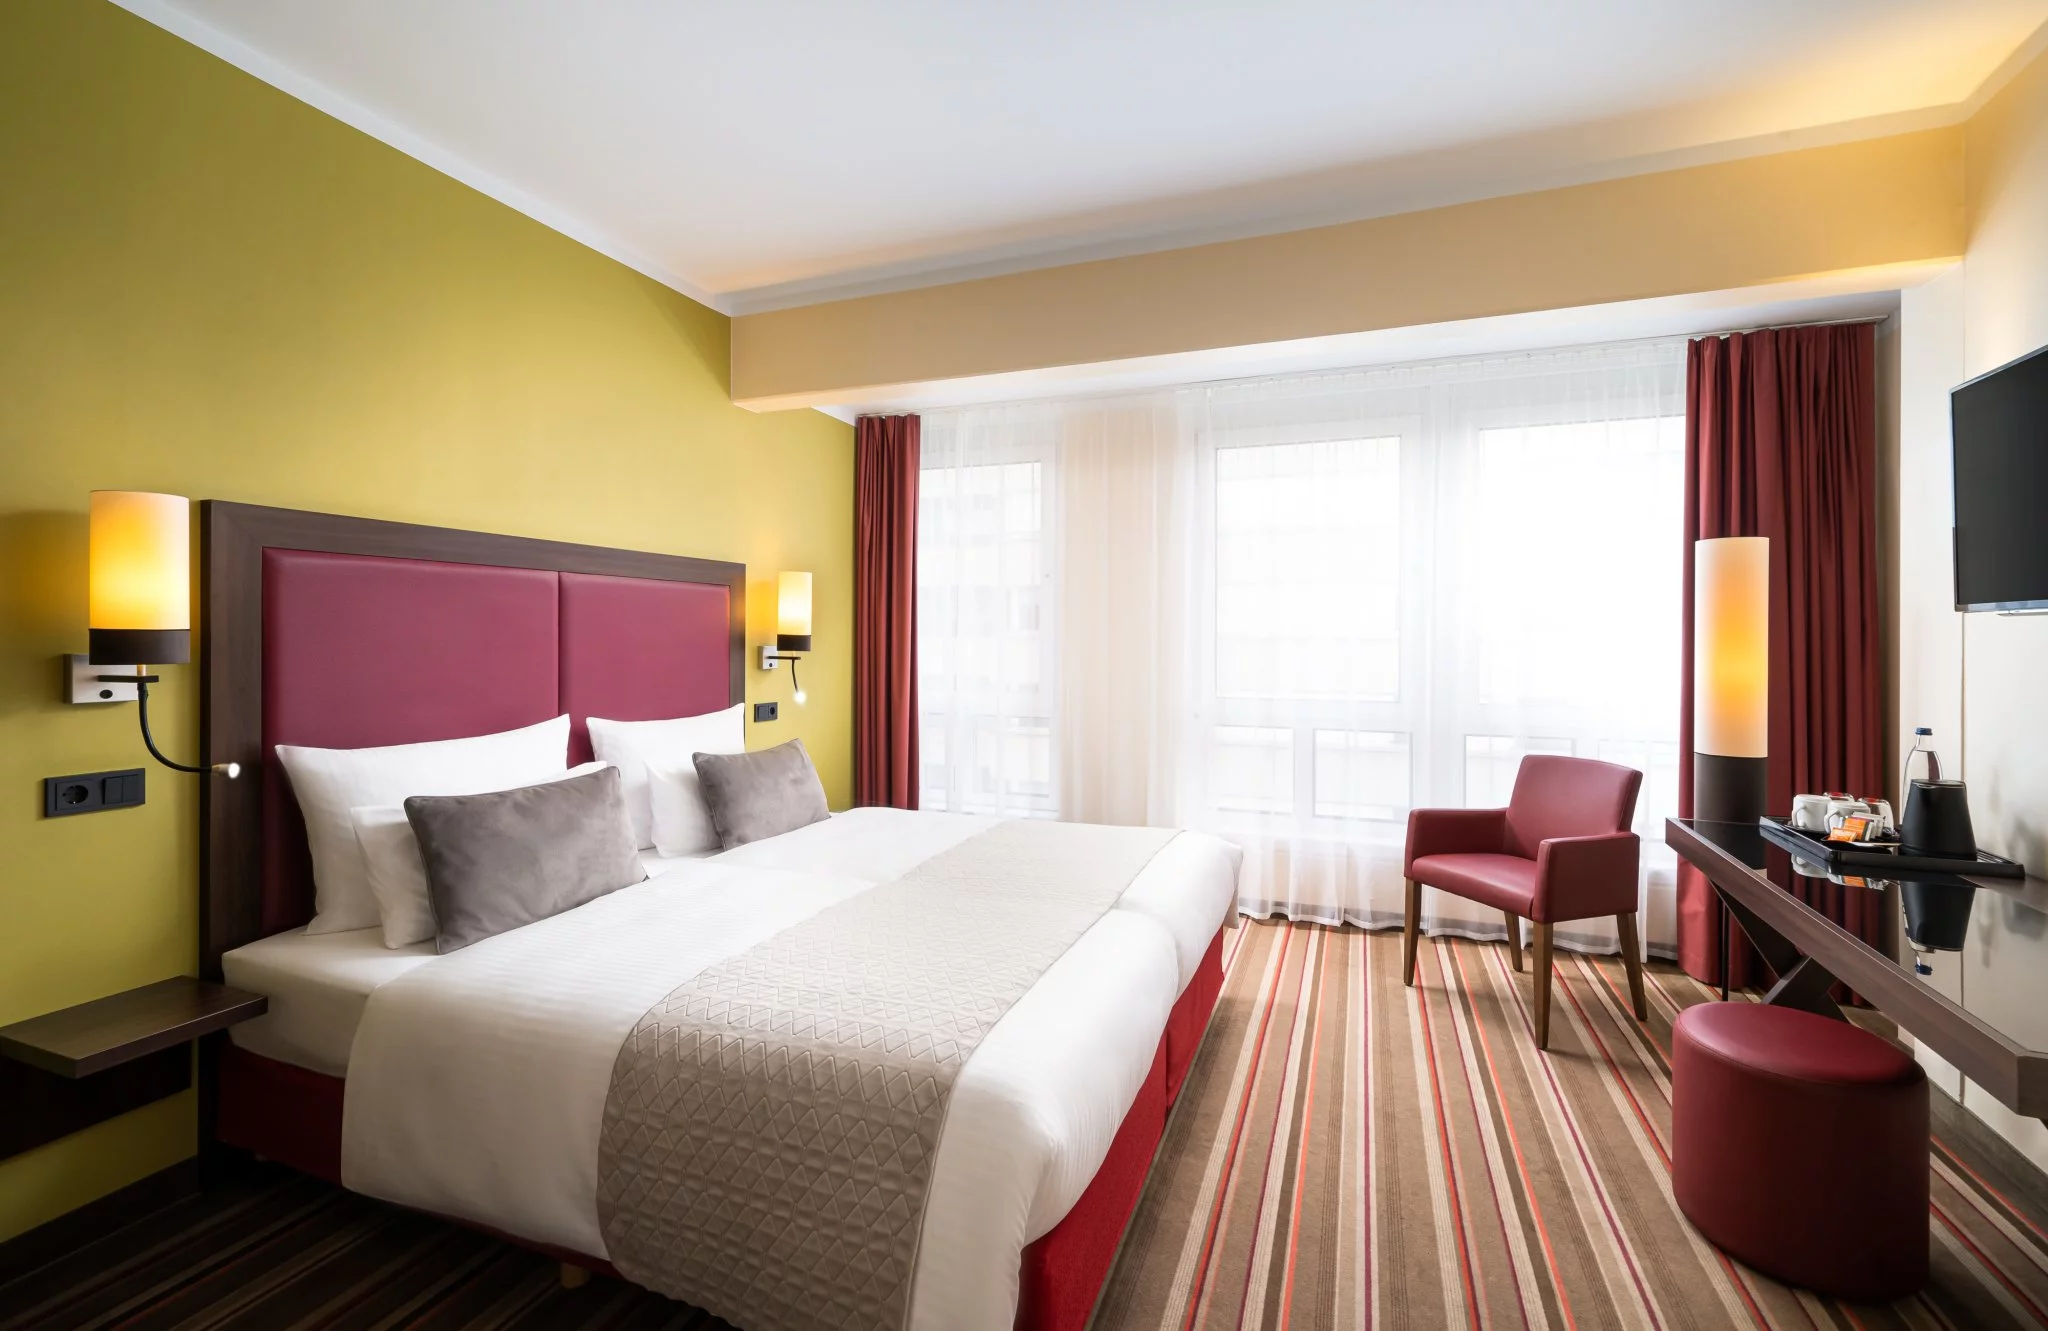 Leonardo Hotel Berlin - Comfort Room